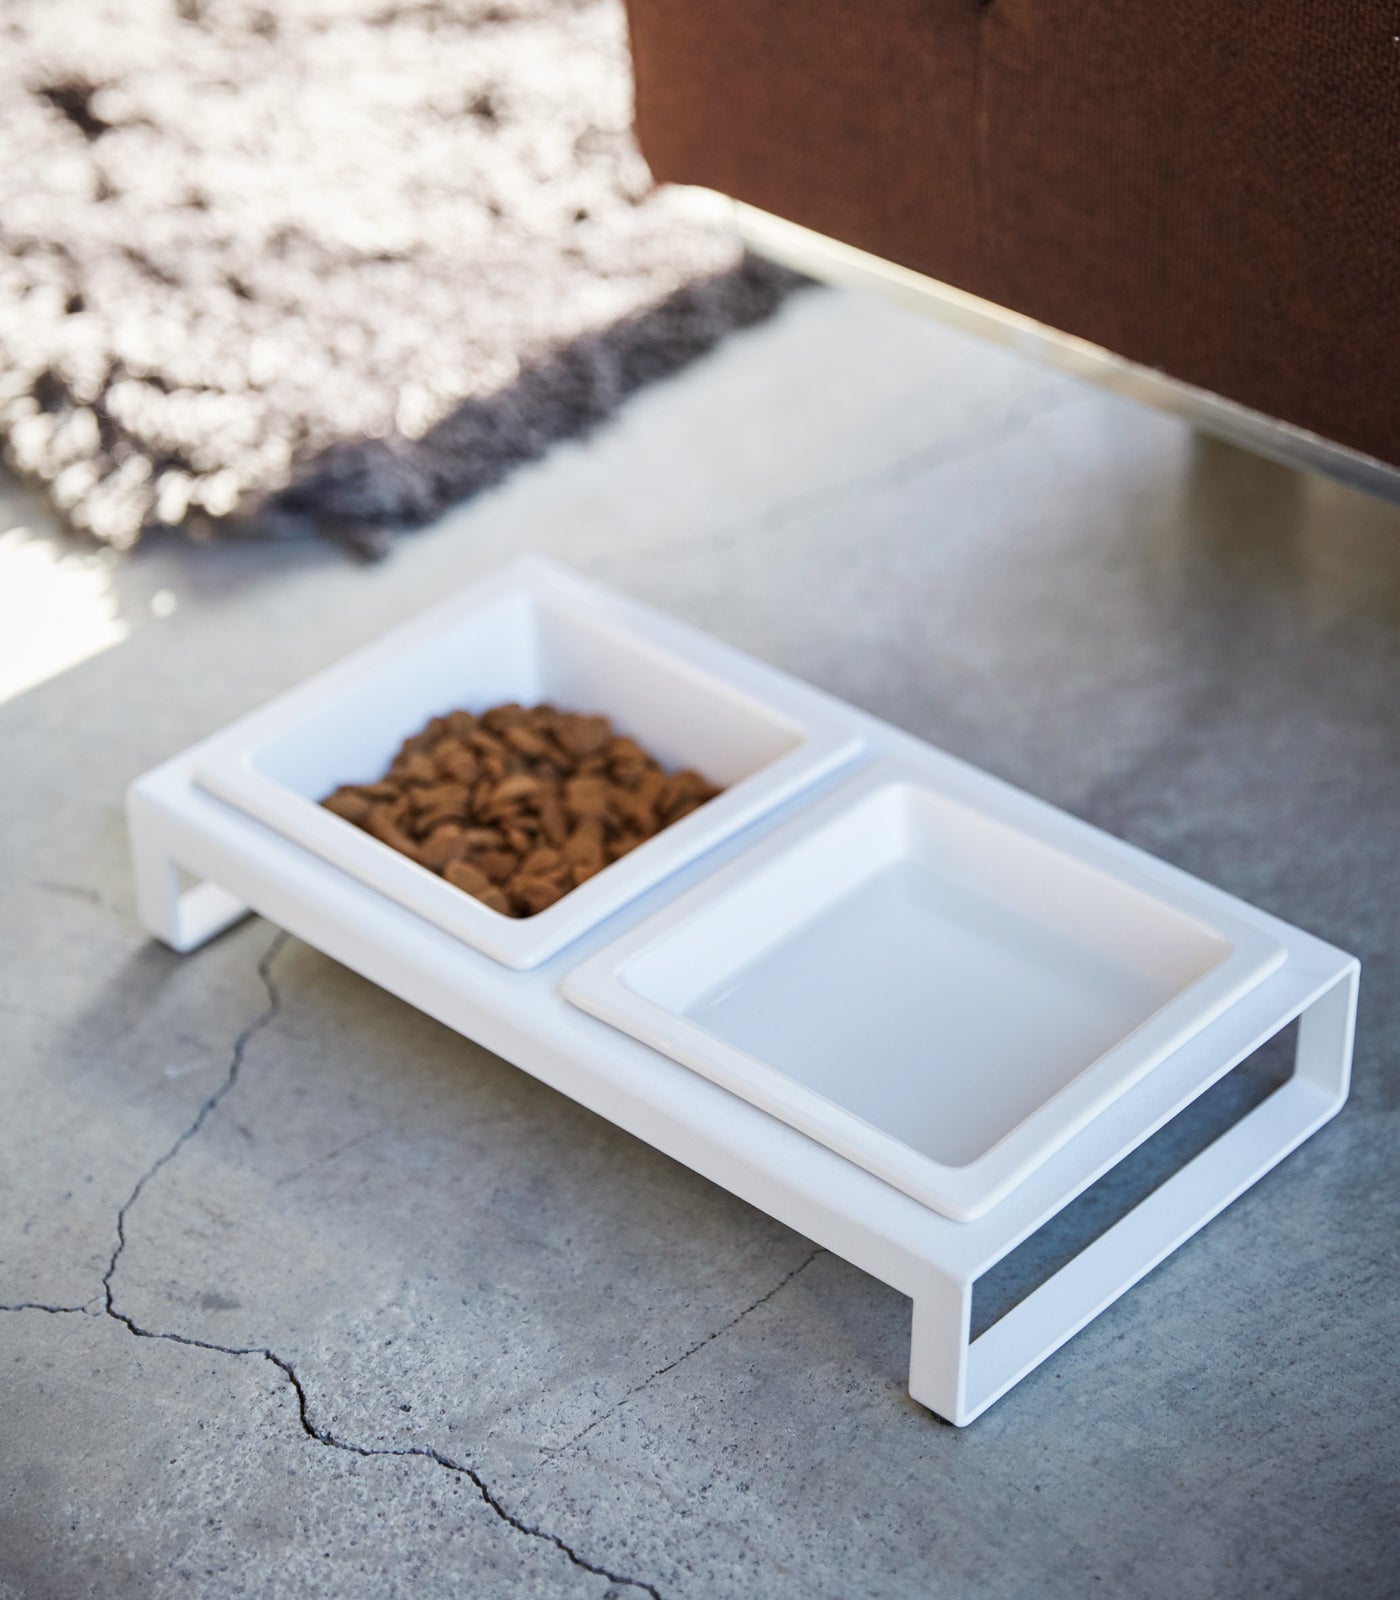 A small Yamazaki Home Pet Food Bowl on a concrete floor.